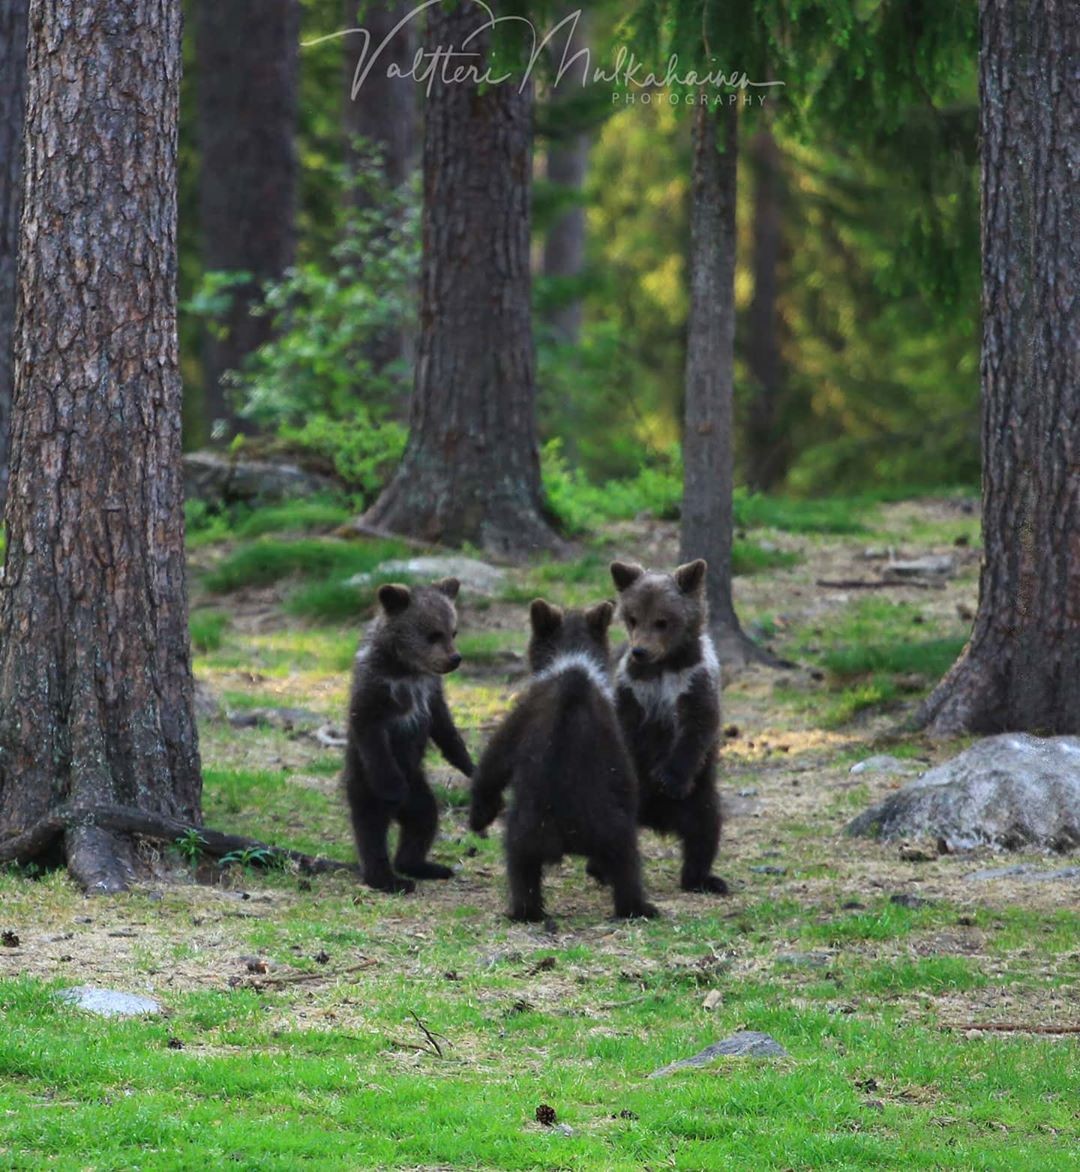 «Три медвежонка». Автор Валттери Мулкахайнен